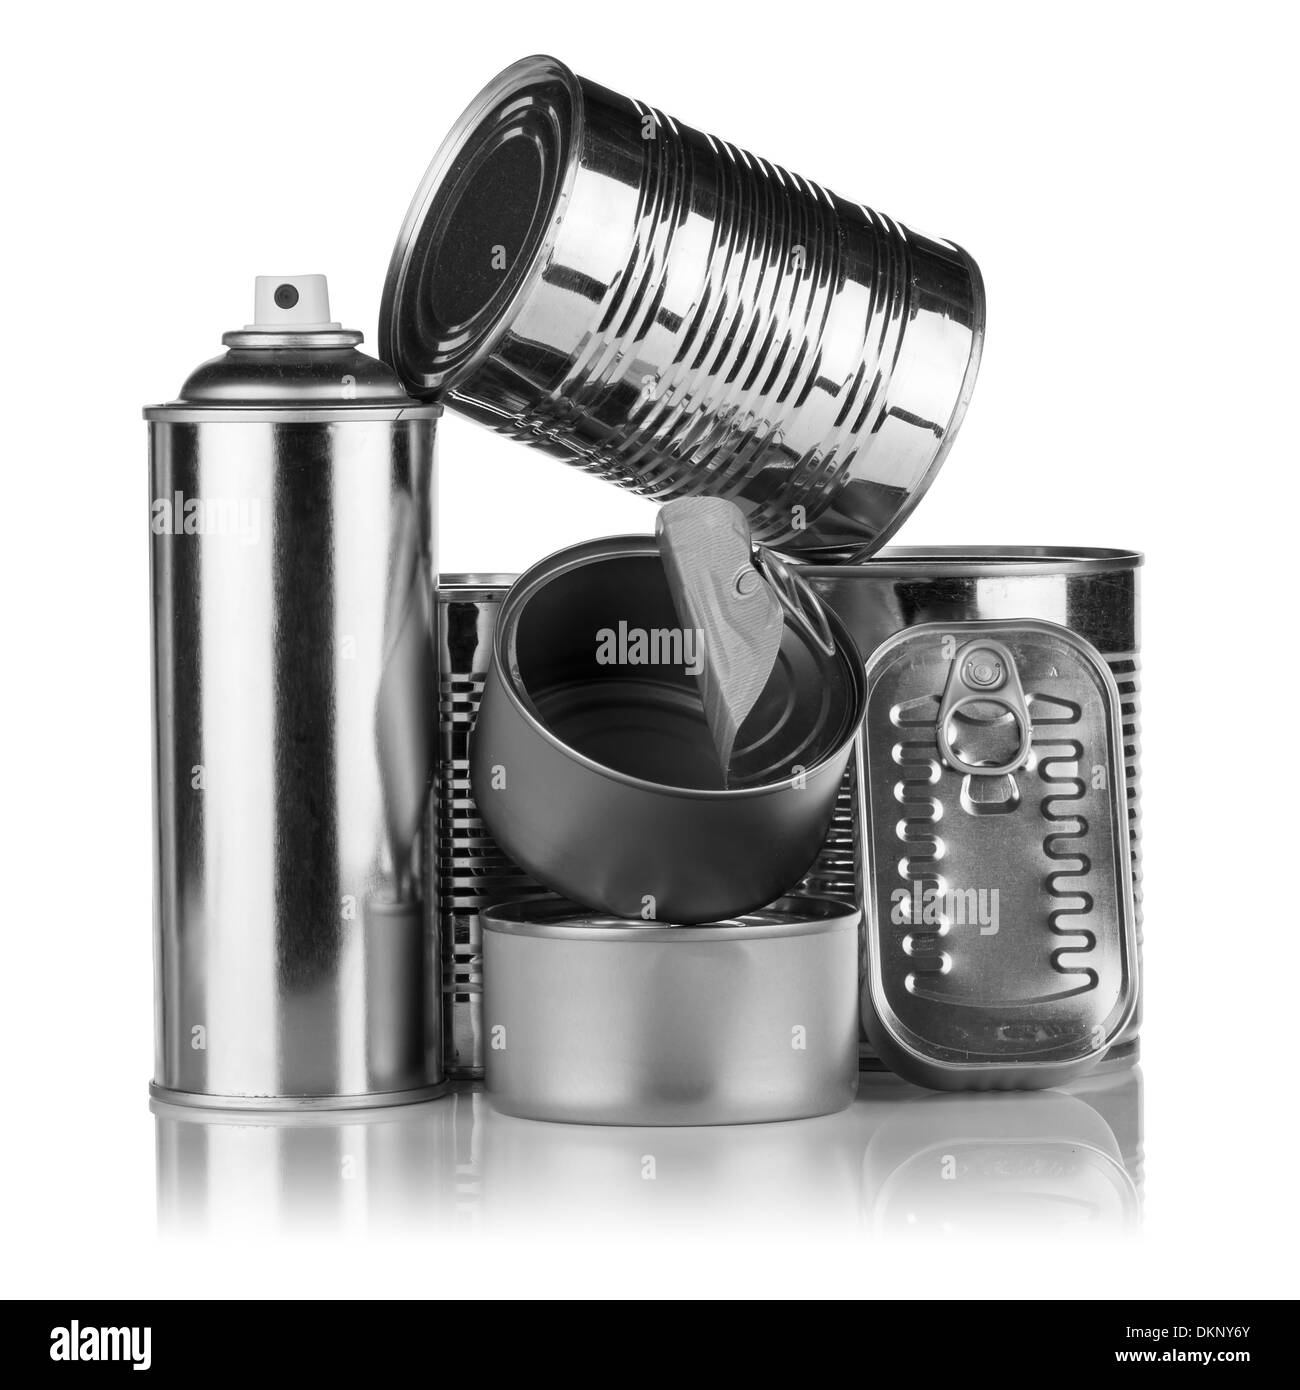 Aluminium profiles hi-res stock photography and images - Alamy